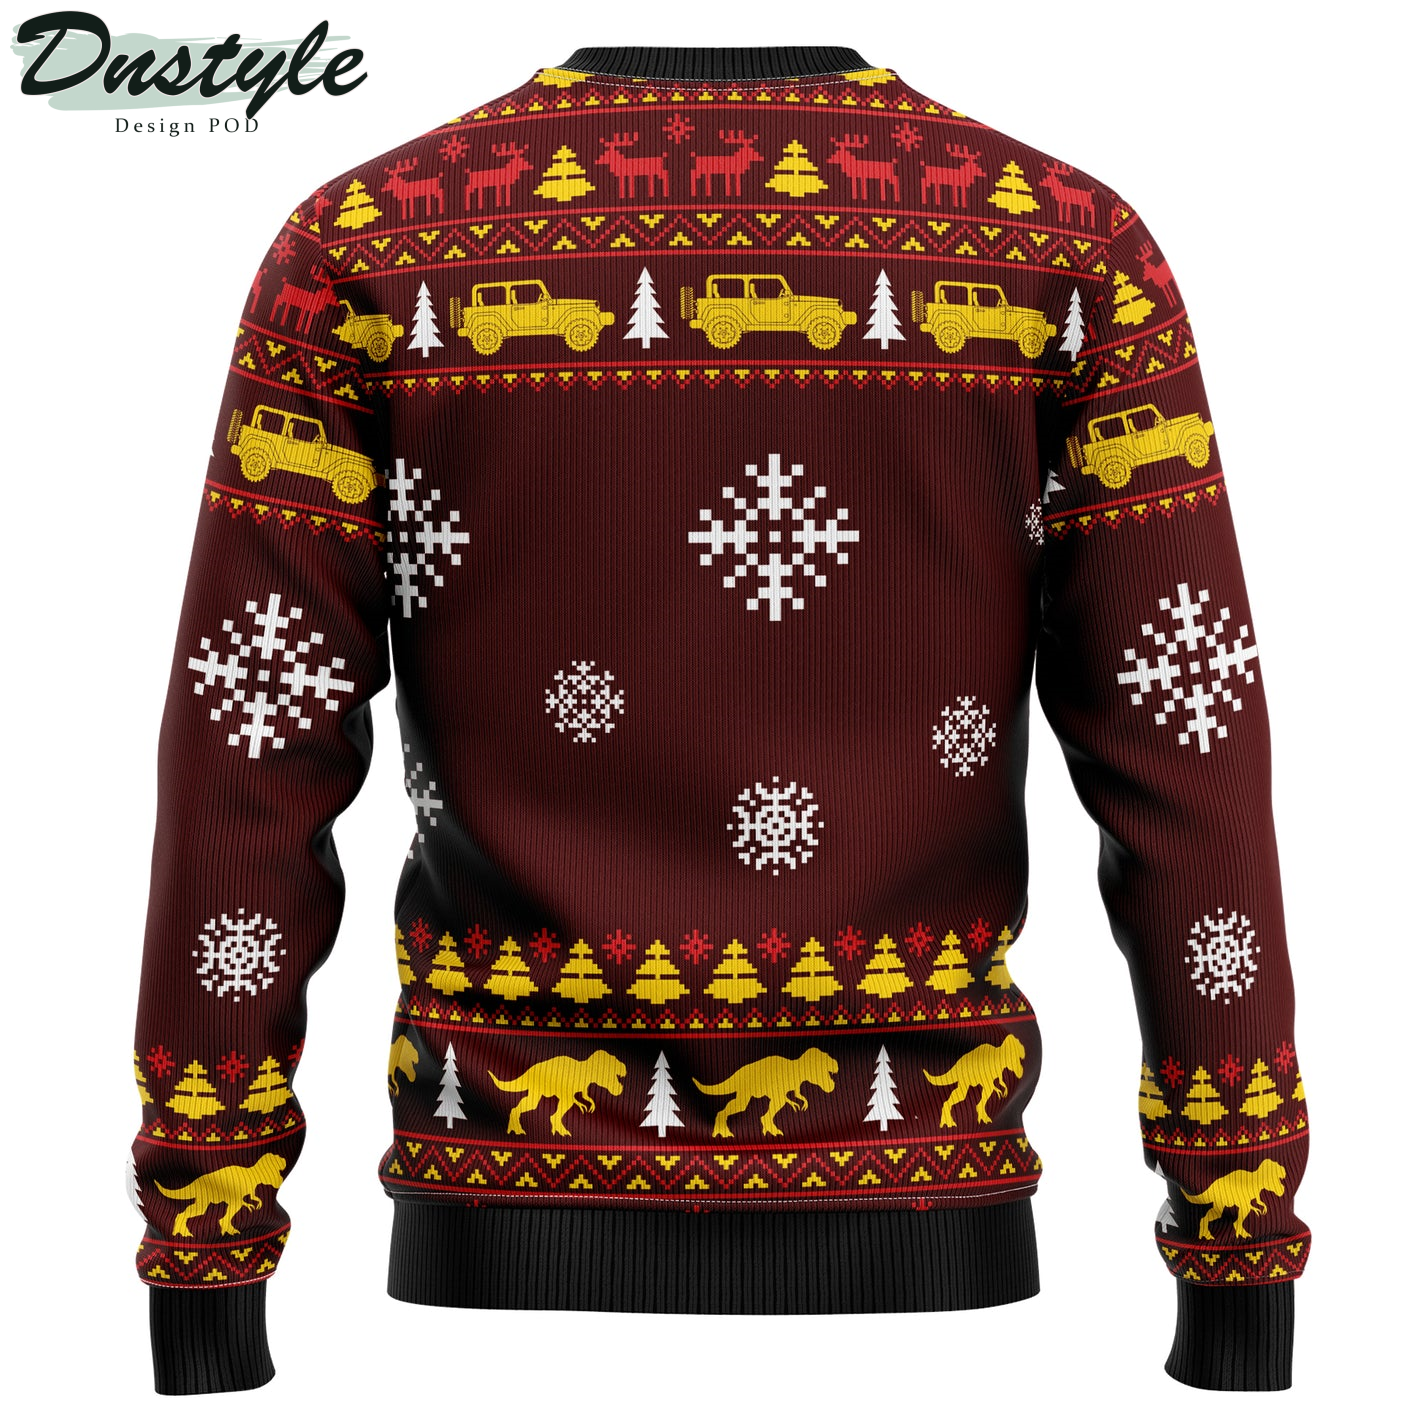 Santassic Park Ugly Christmas Sweater